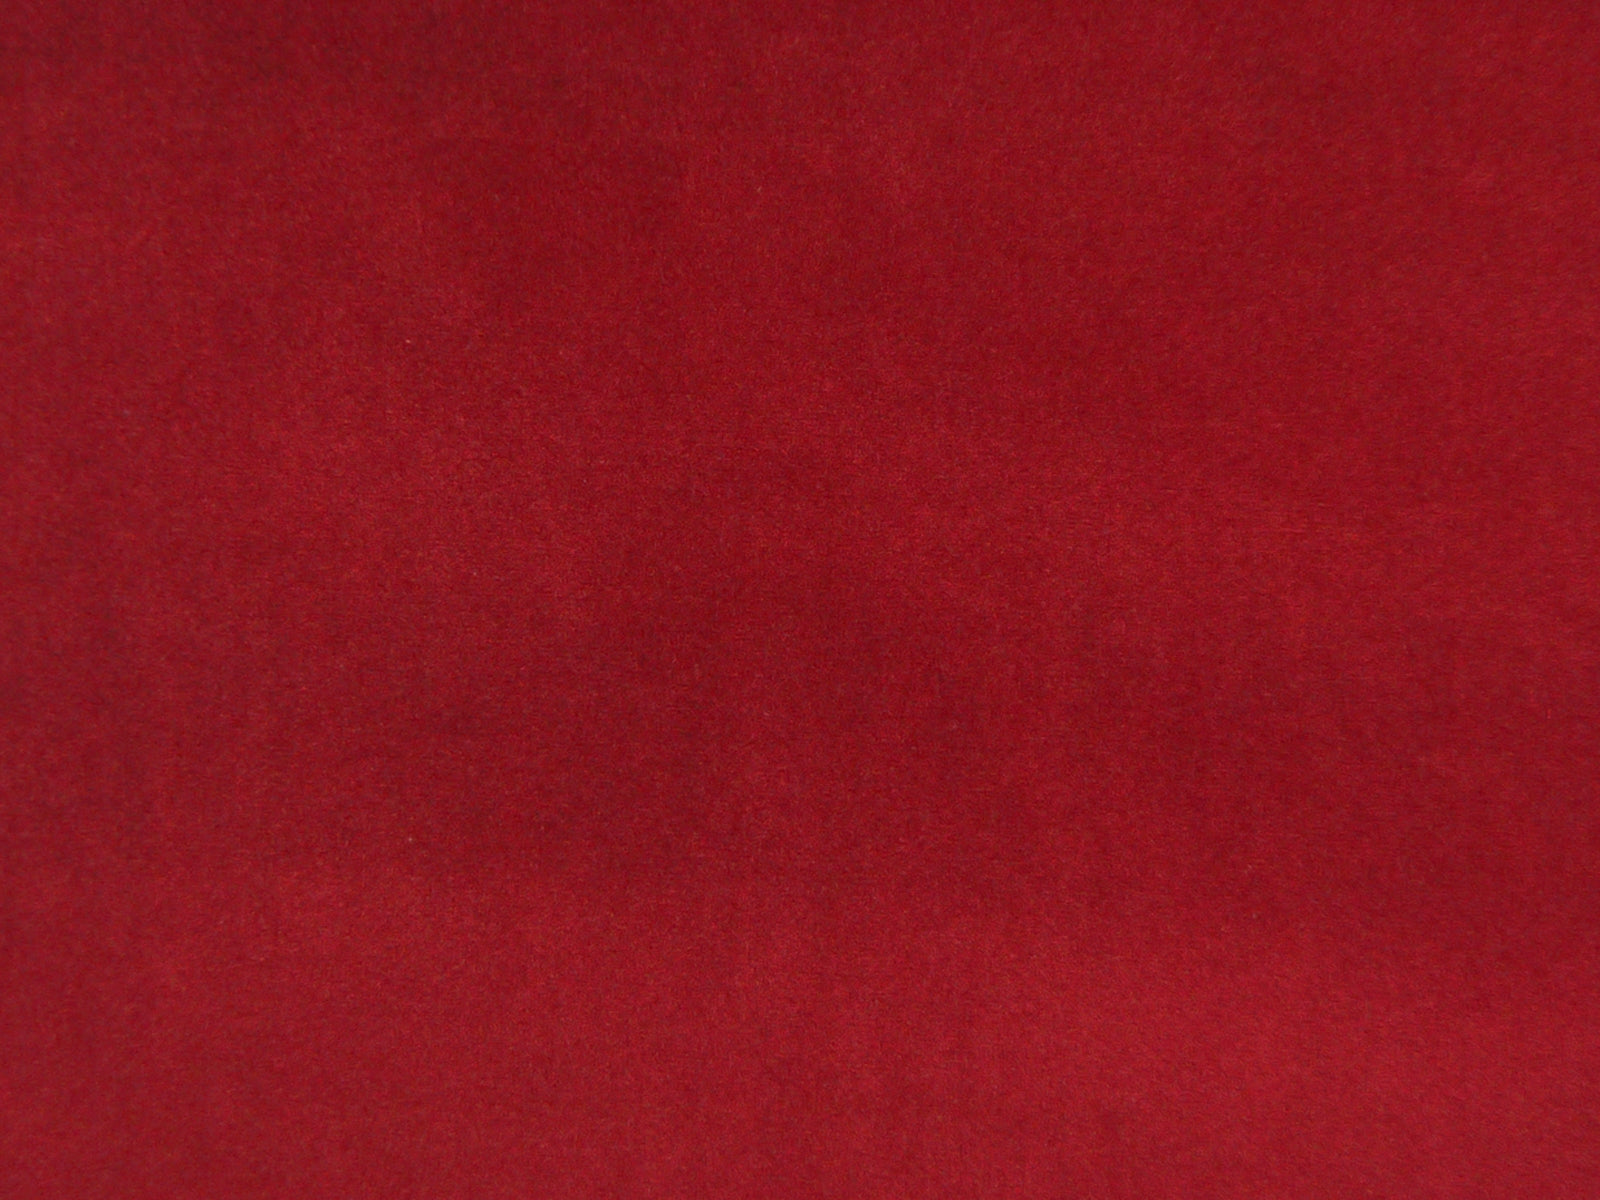 Cambio Fabric Samples - Rydan Interiors